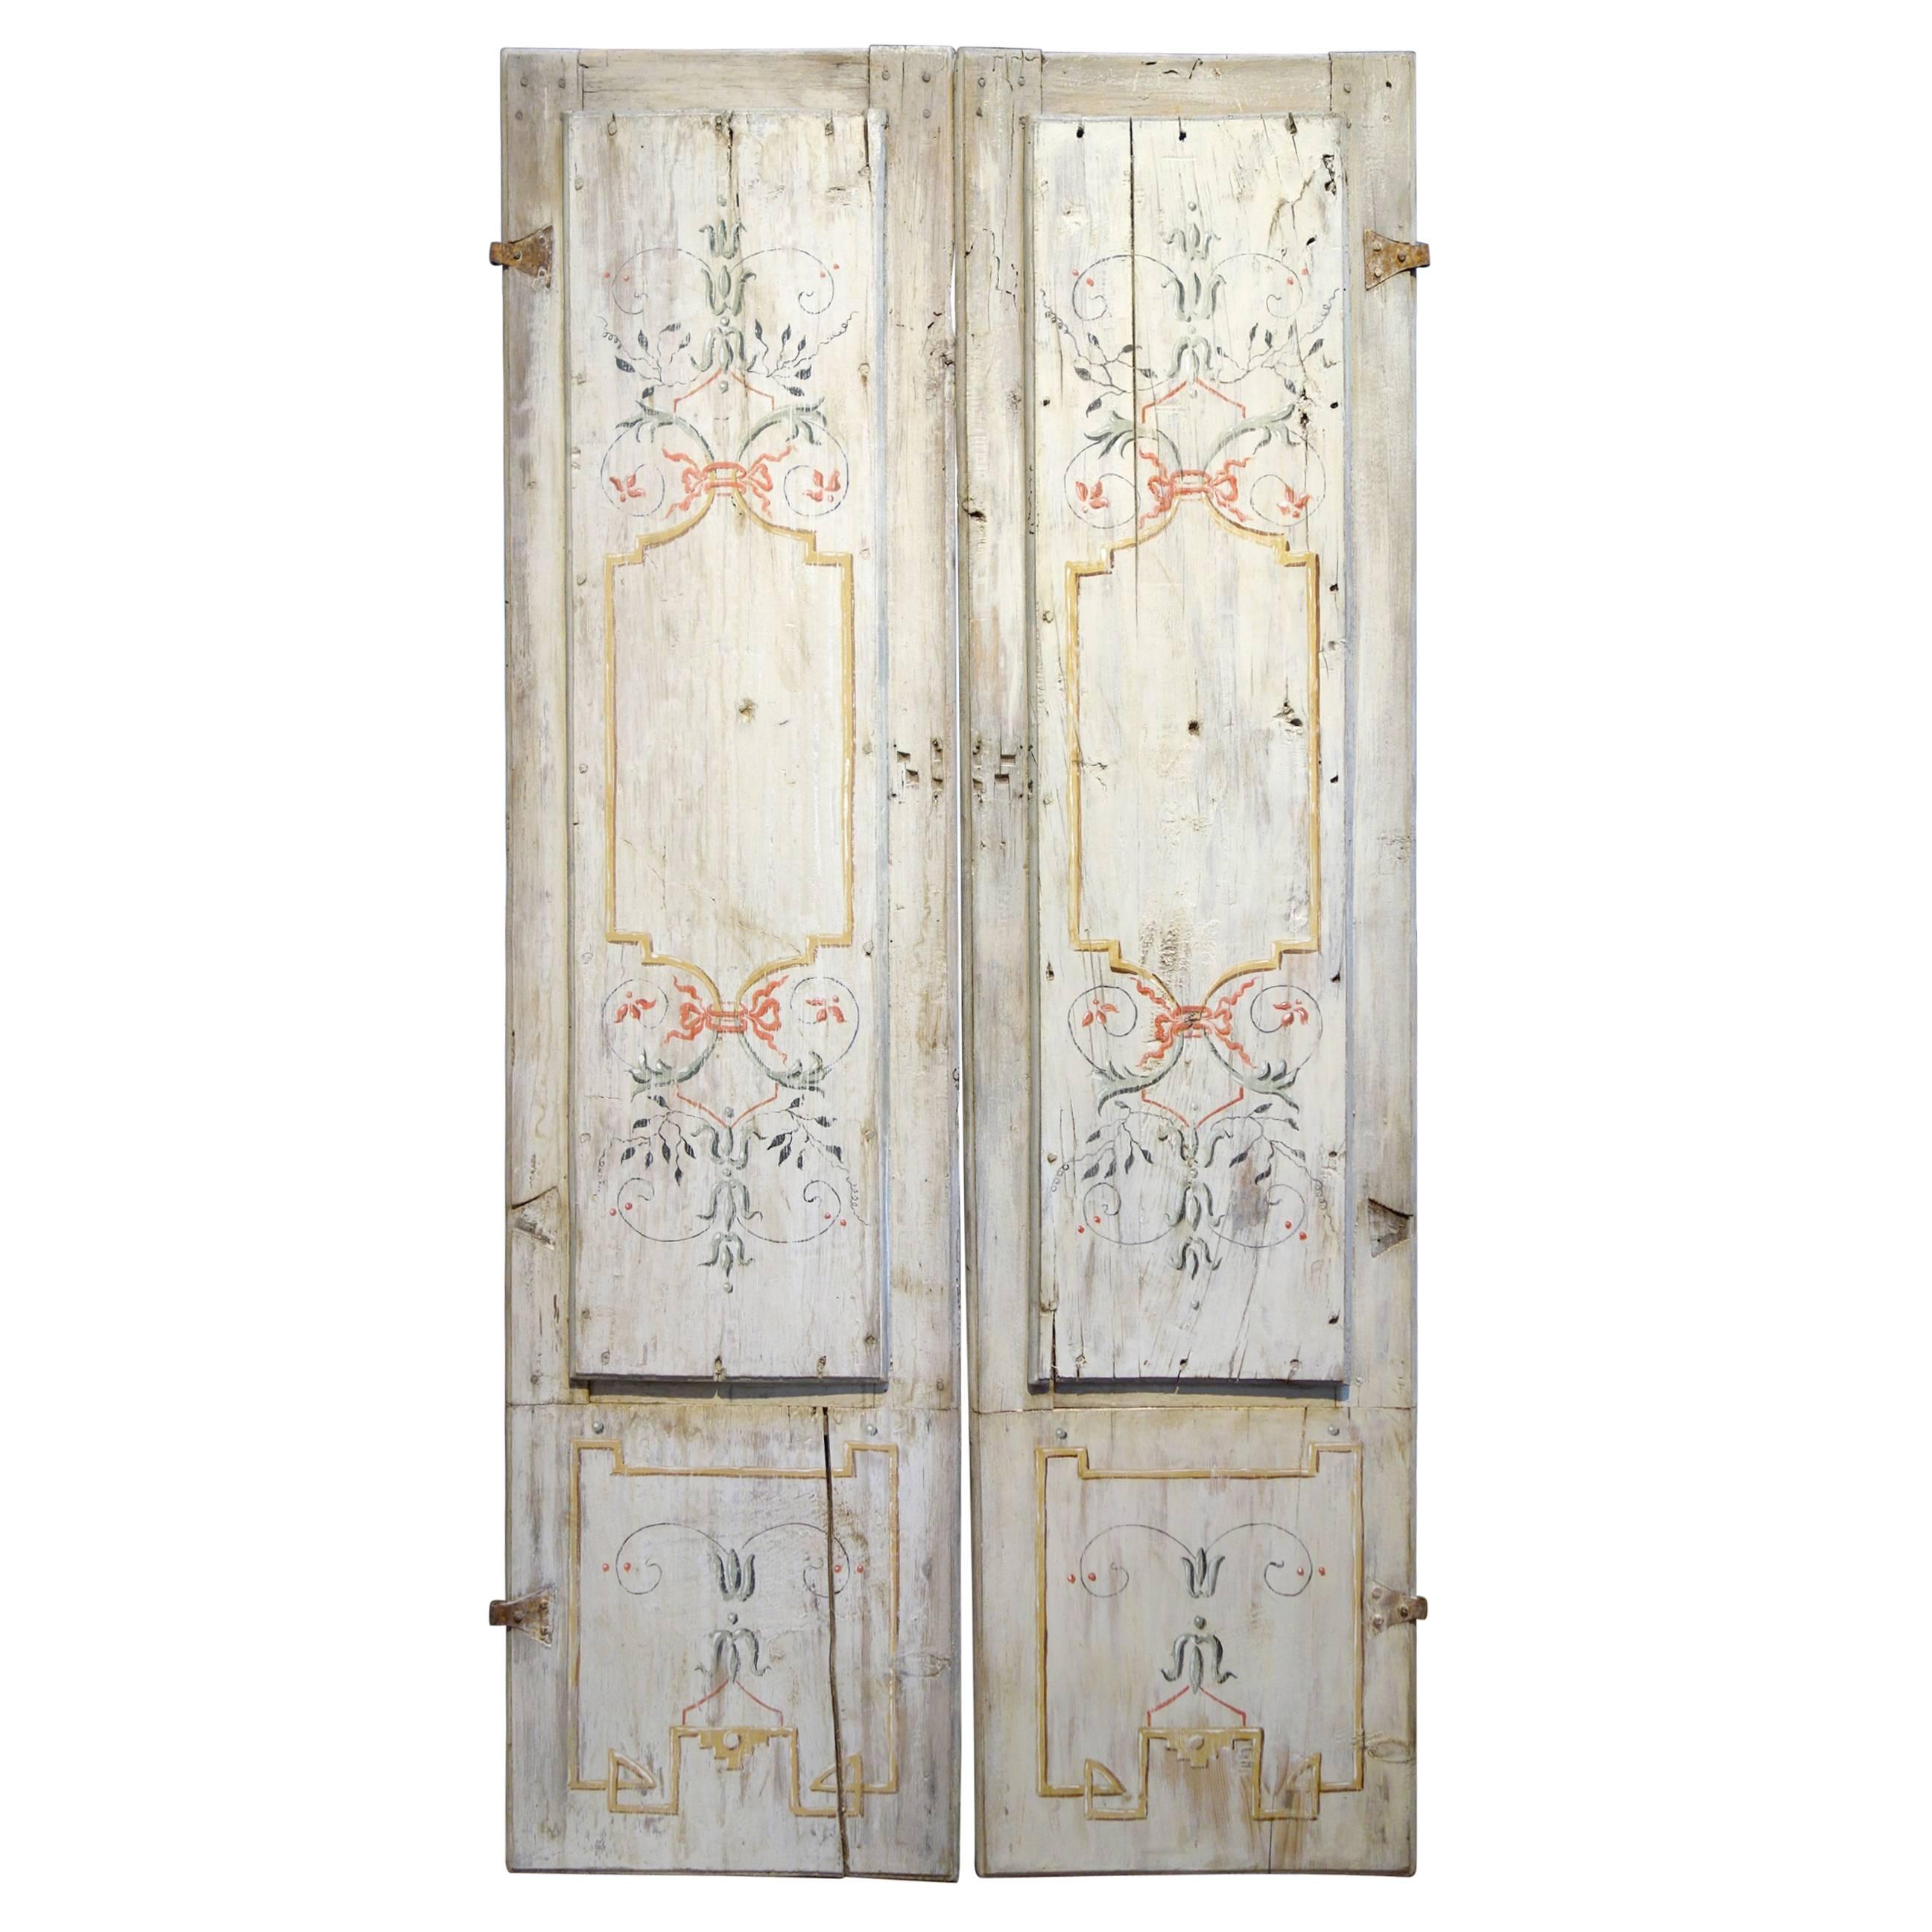 Antique Italian Pair of Hand Painted Door Panels from Arezzo Tuscany Circa 1820